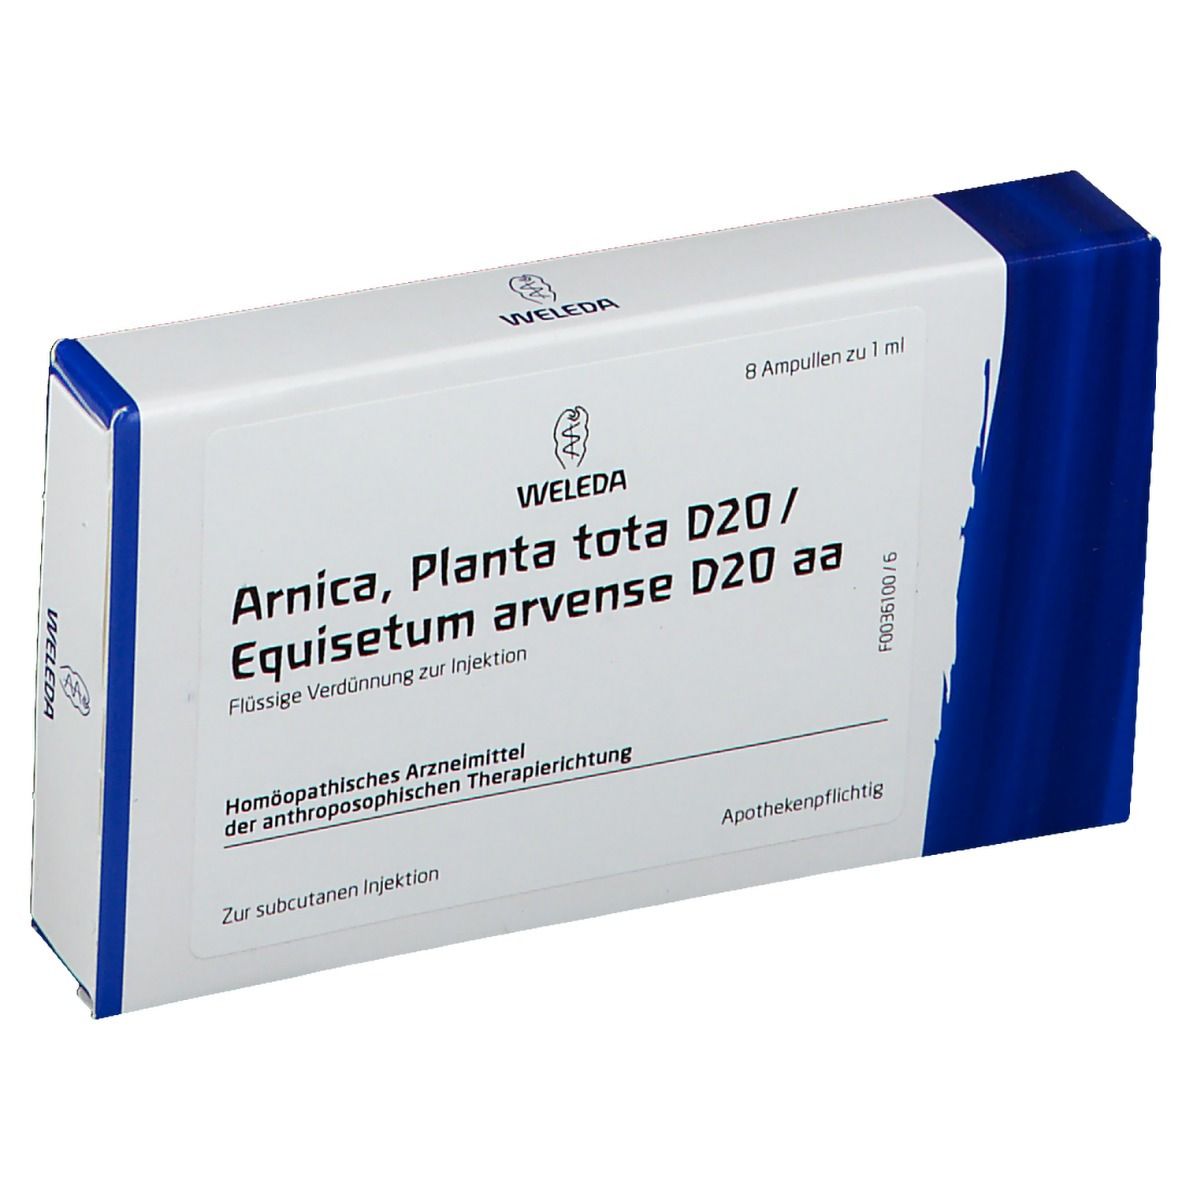 Arnica Planta Tota D20/Equis.arv.D20 aa Ampullen